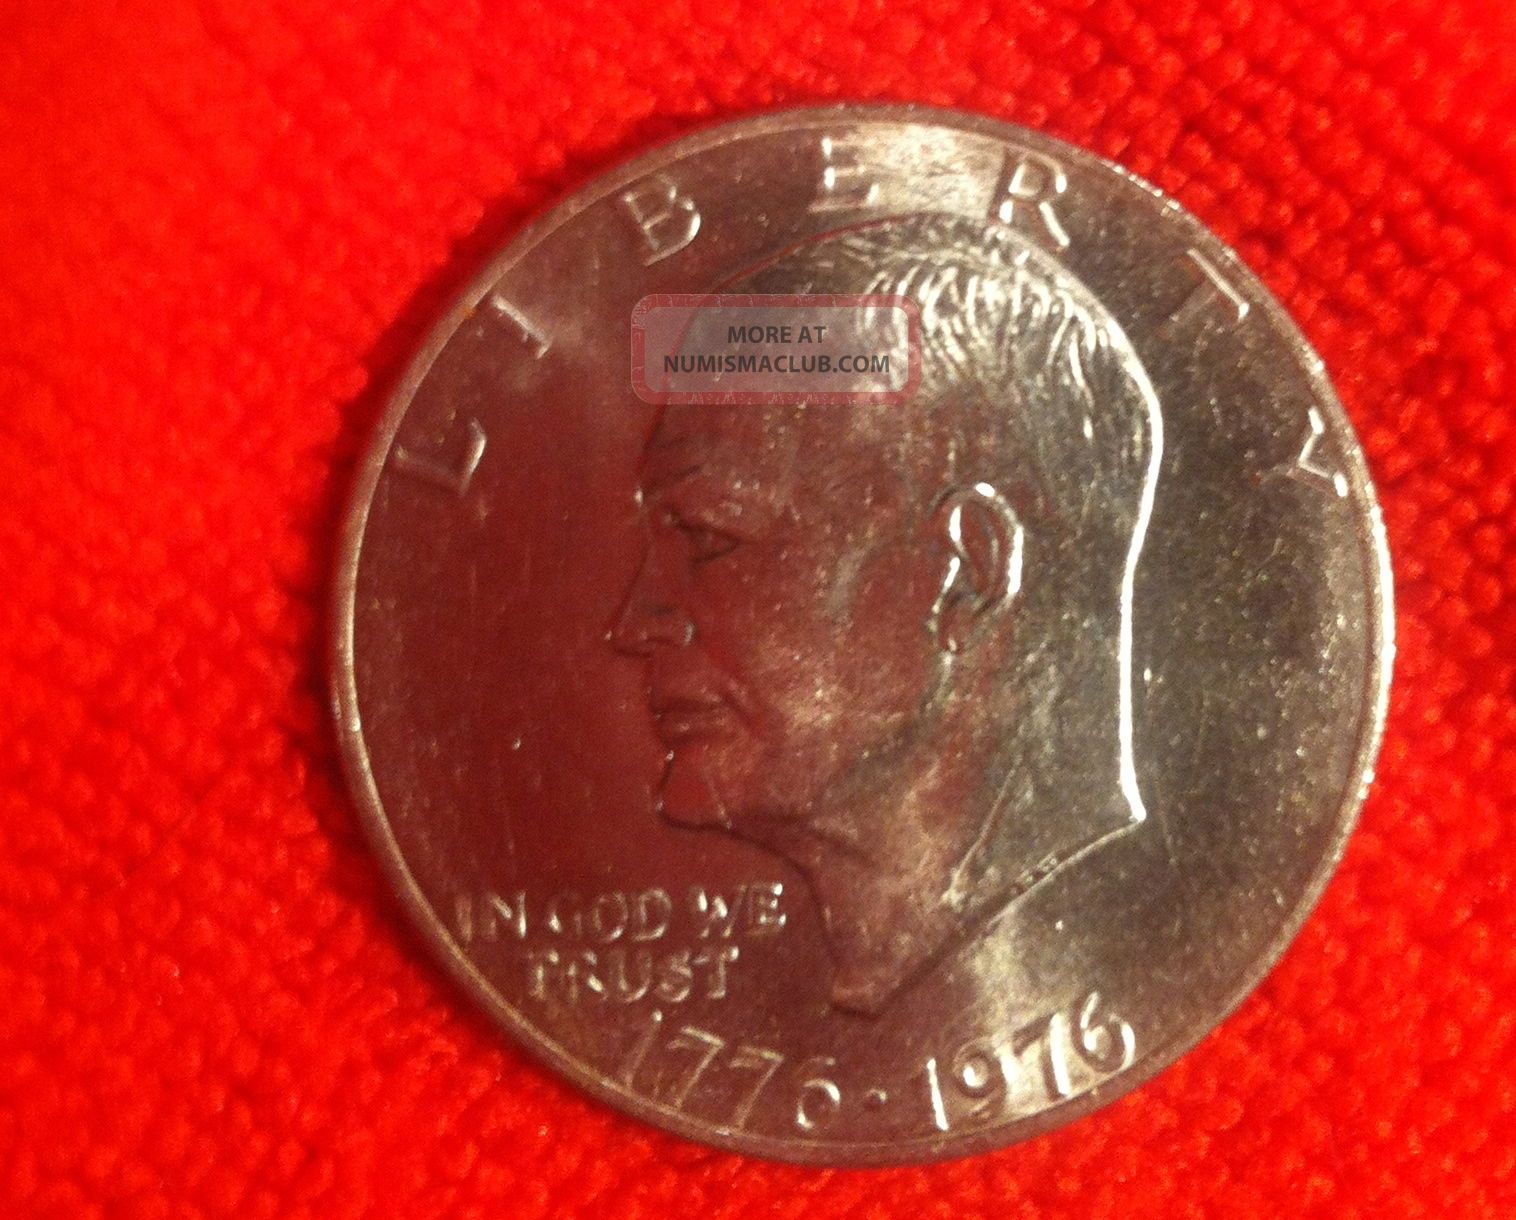 1972 silver dollar no mint mark value